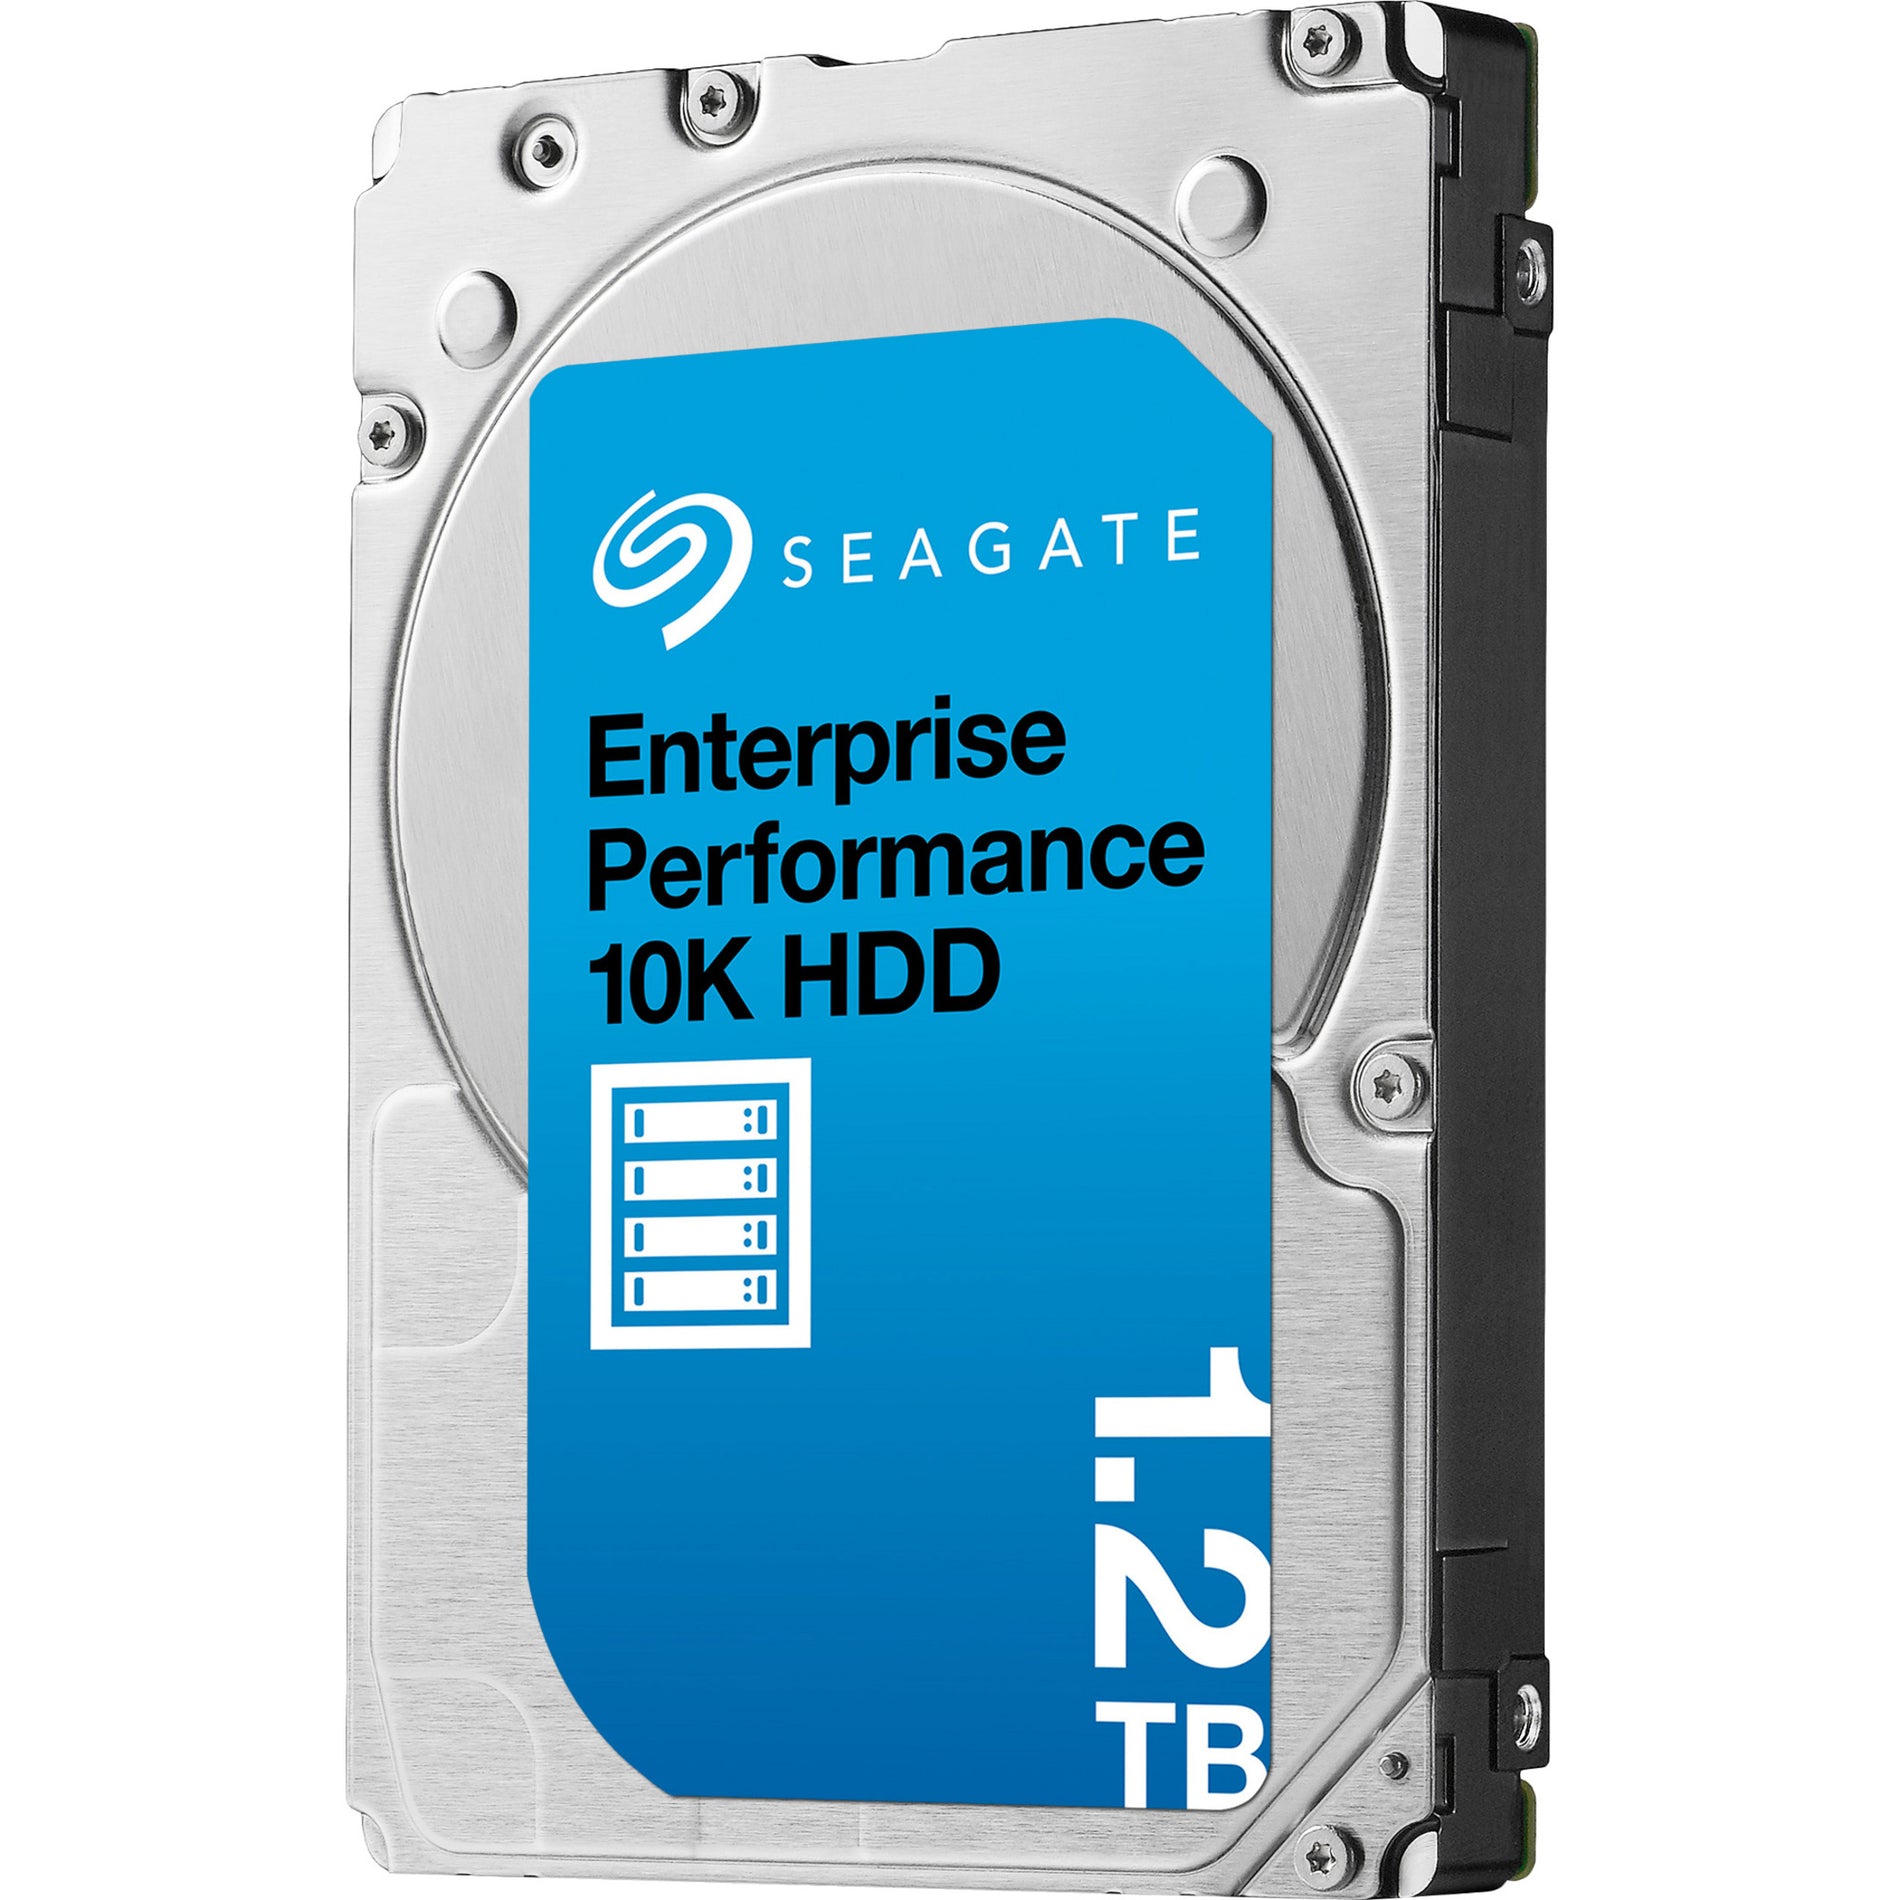 Seagate ST1200MM0139 Enterprise Performance 10k HDD, 1.20 TB SAS Hard Drive, 10000 RPM, 256 MB Buffer